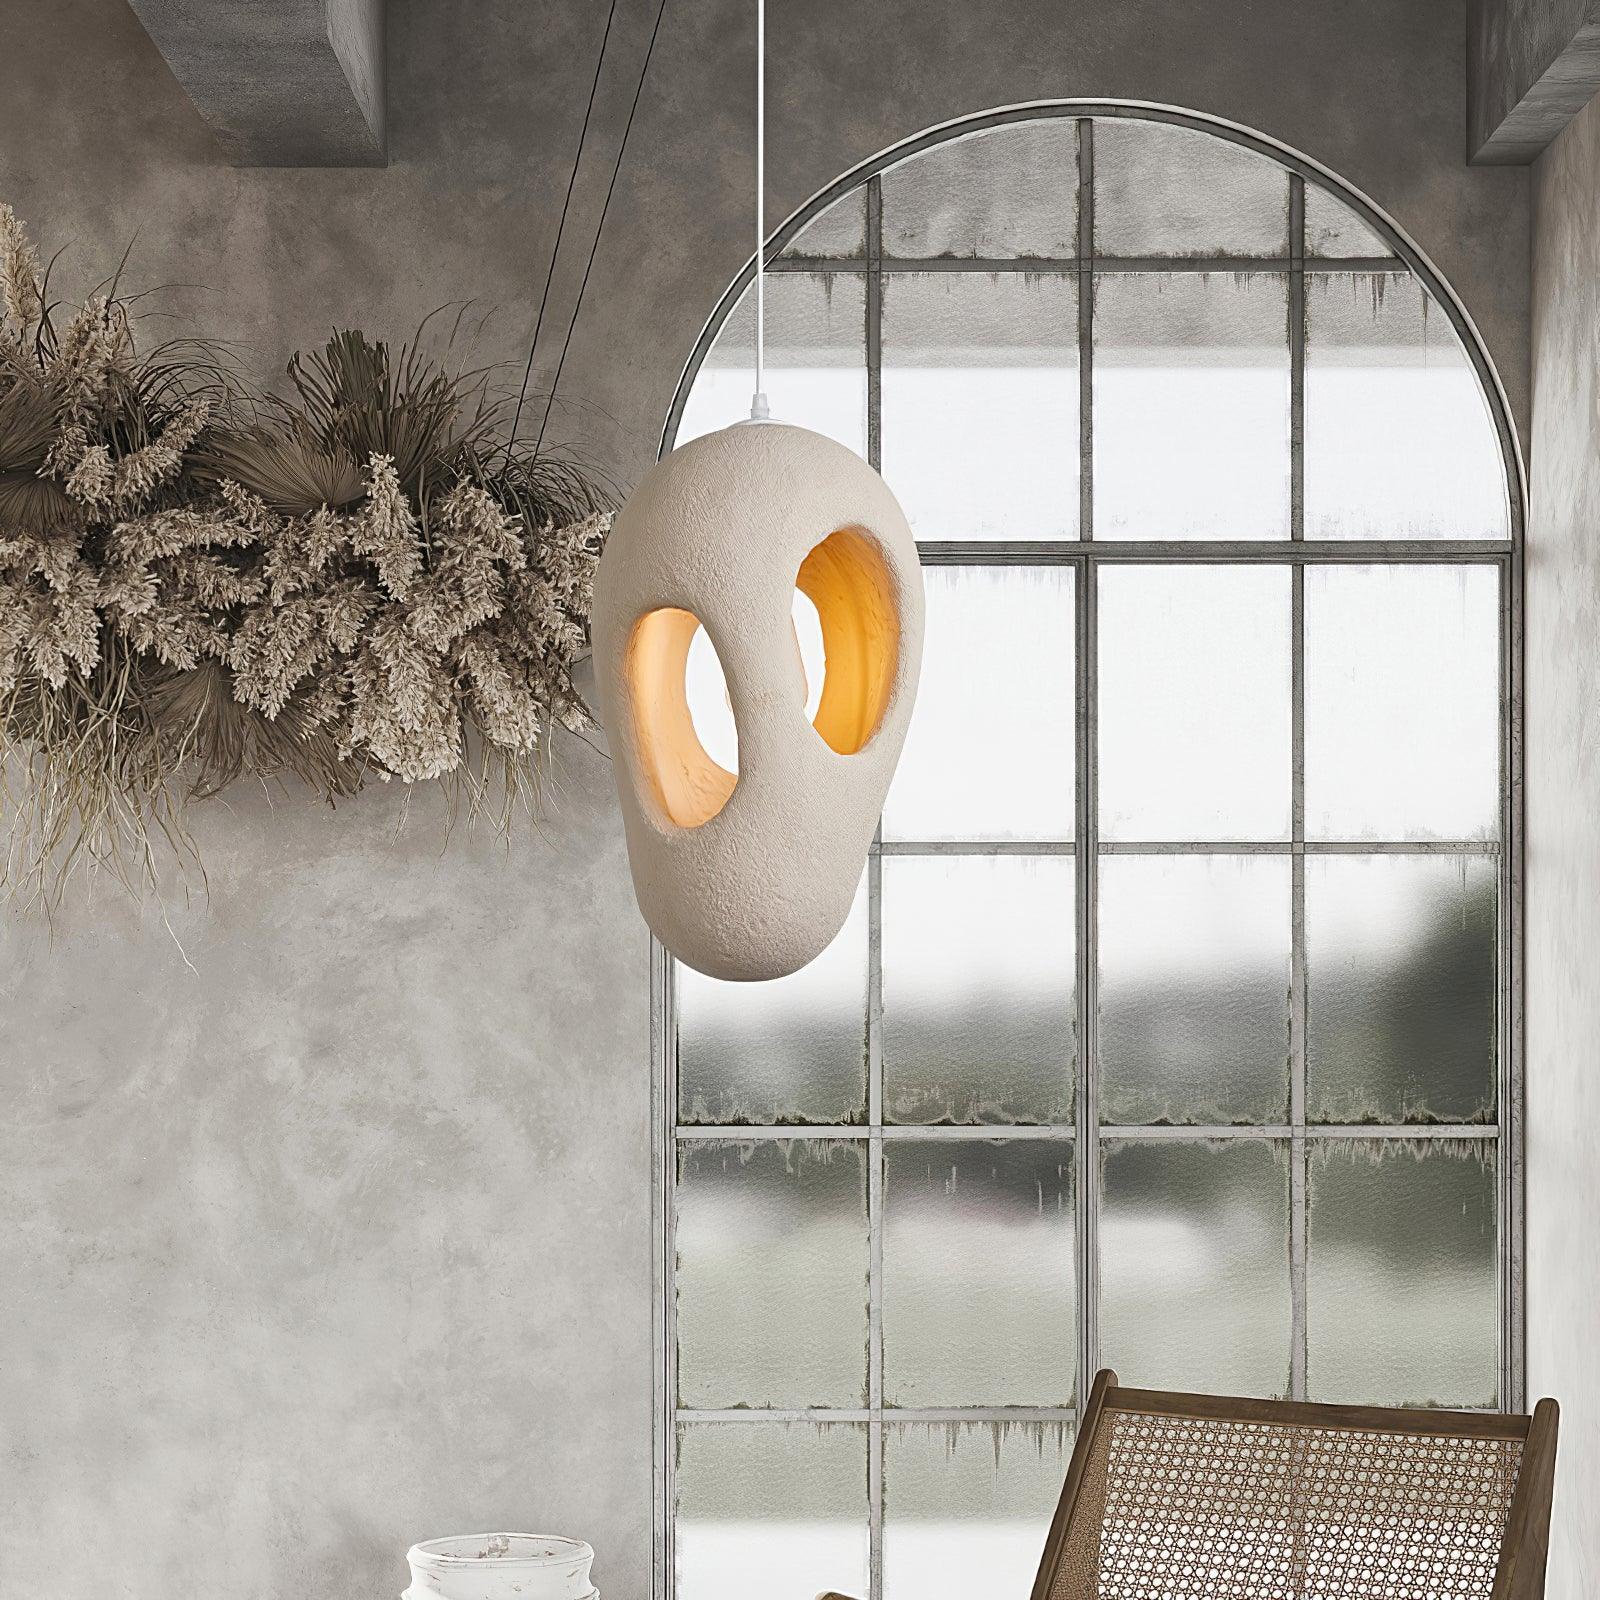 Japanese Wabi-Sabi Style Creative Retro Resin Sculpture Light For Living Room